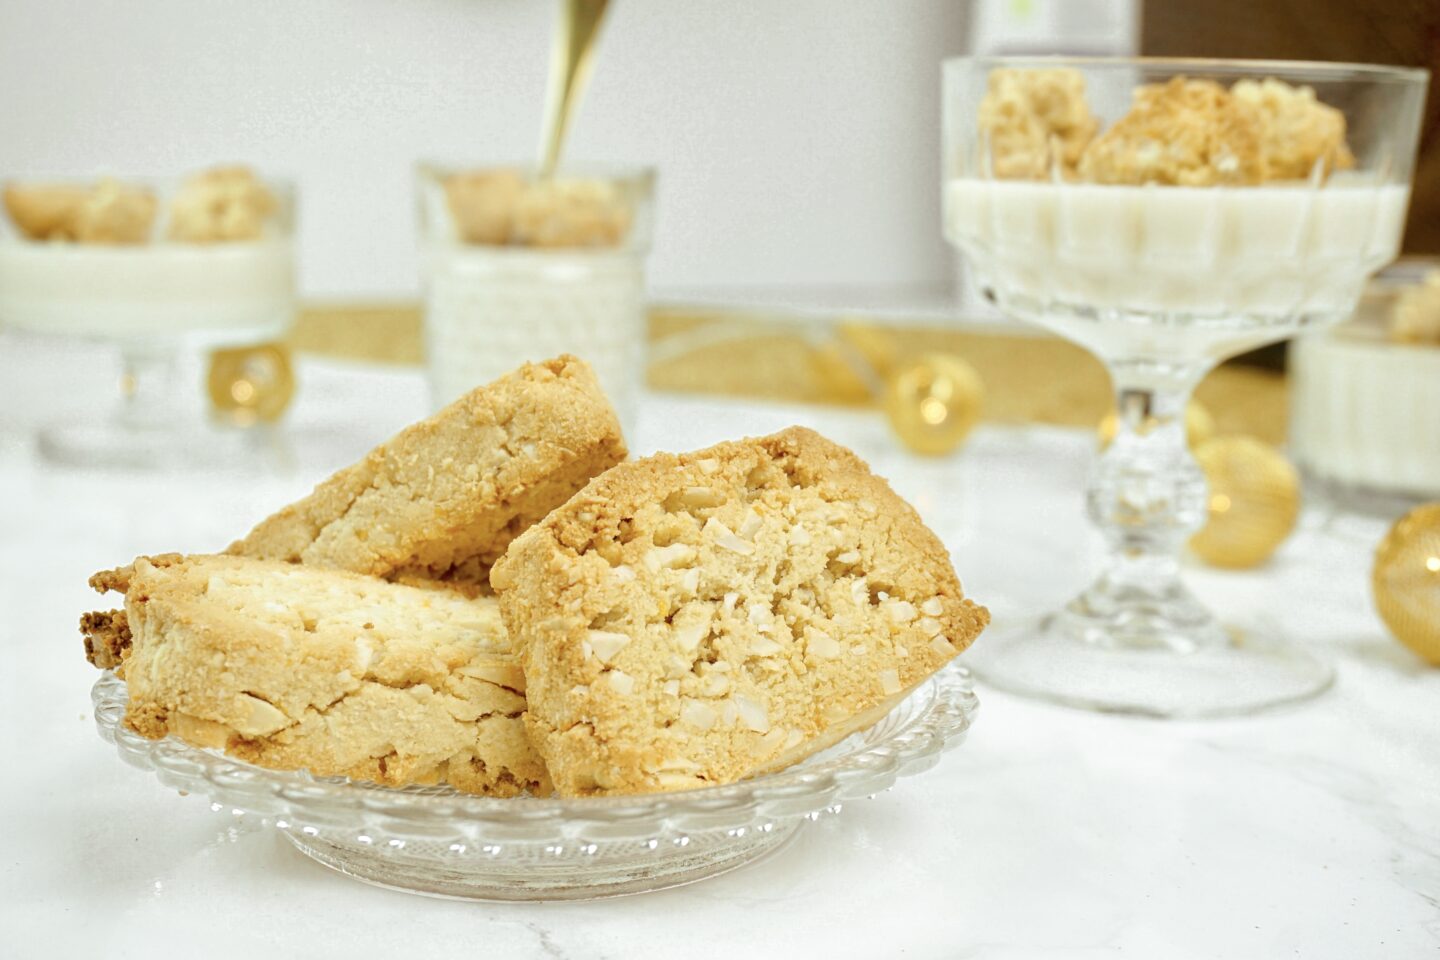 foto van vegan biscotti in kerstsfeer met goud en wit